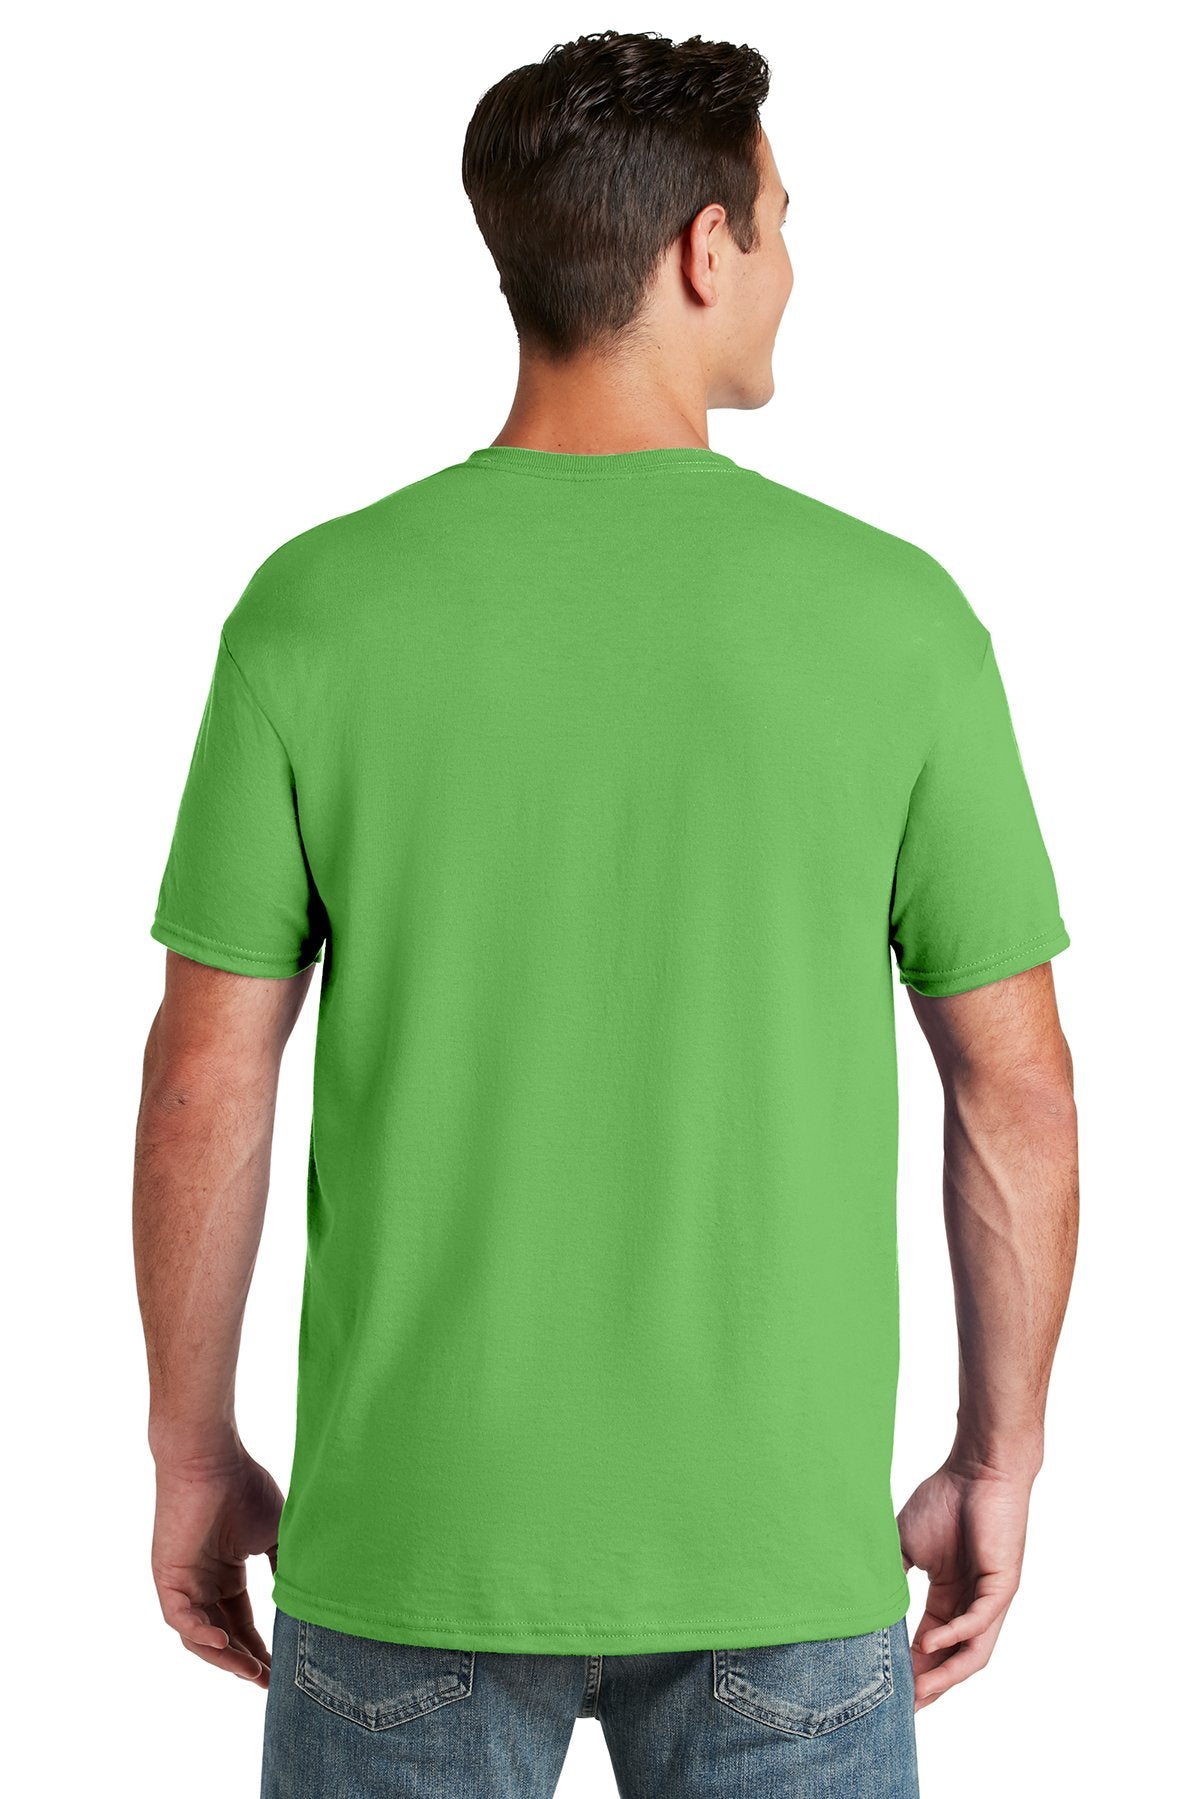 Jerzees Dri-Power Active 50/50 Cotton/Poly T-Shirt 29M Kiwi